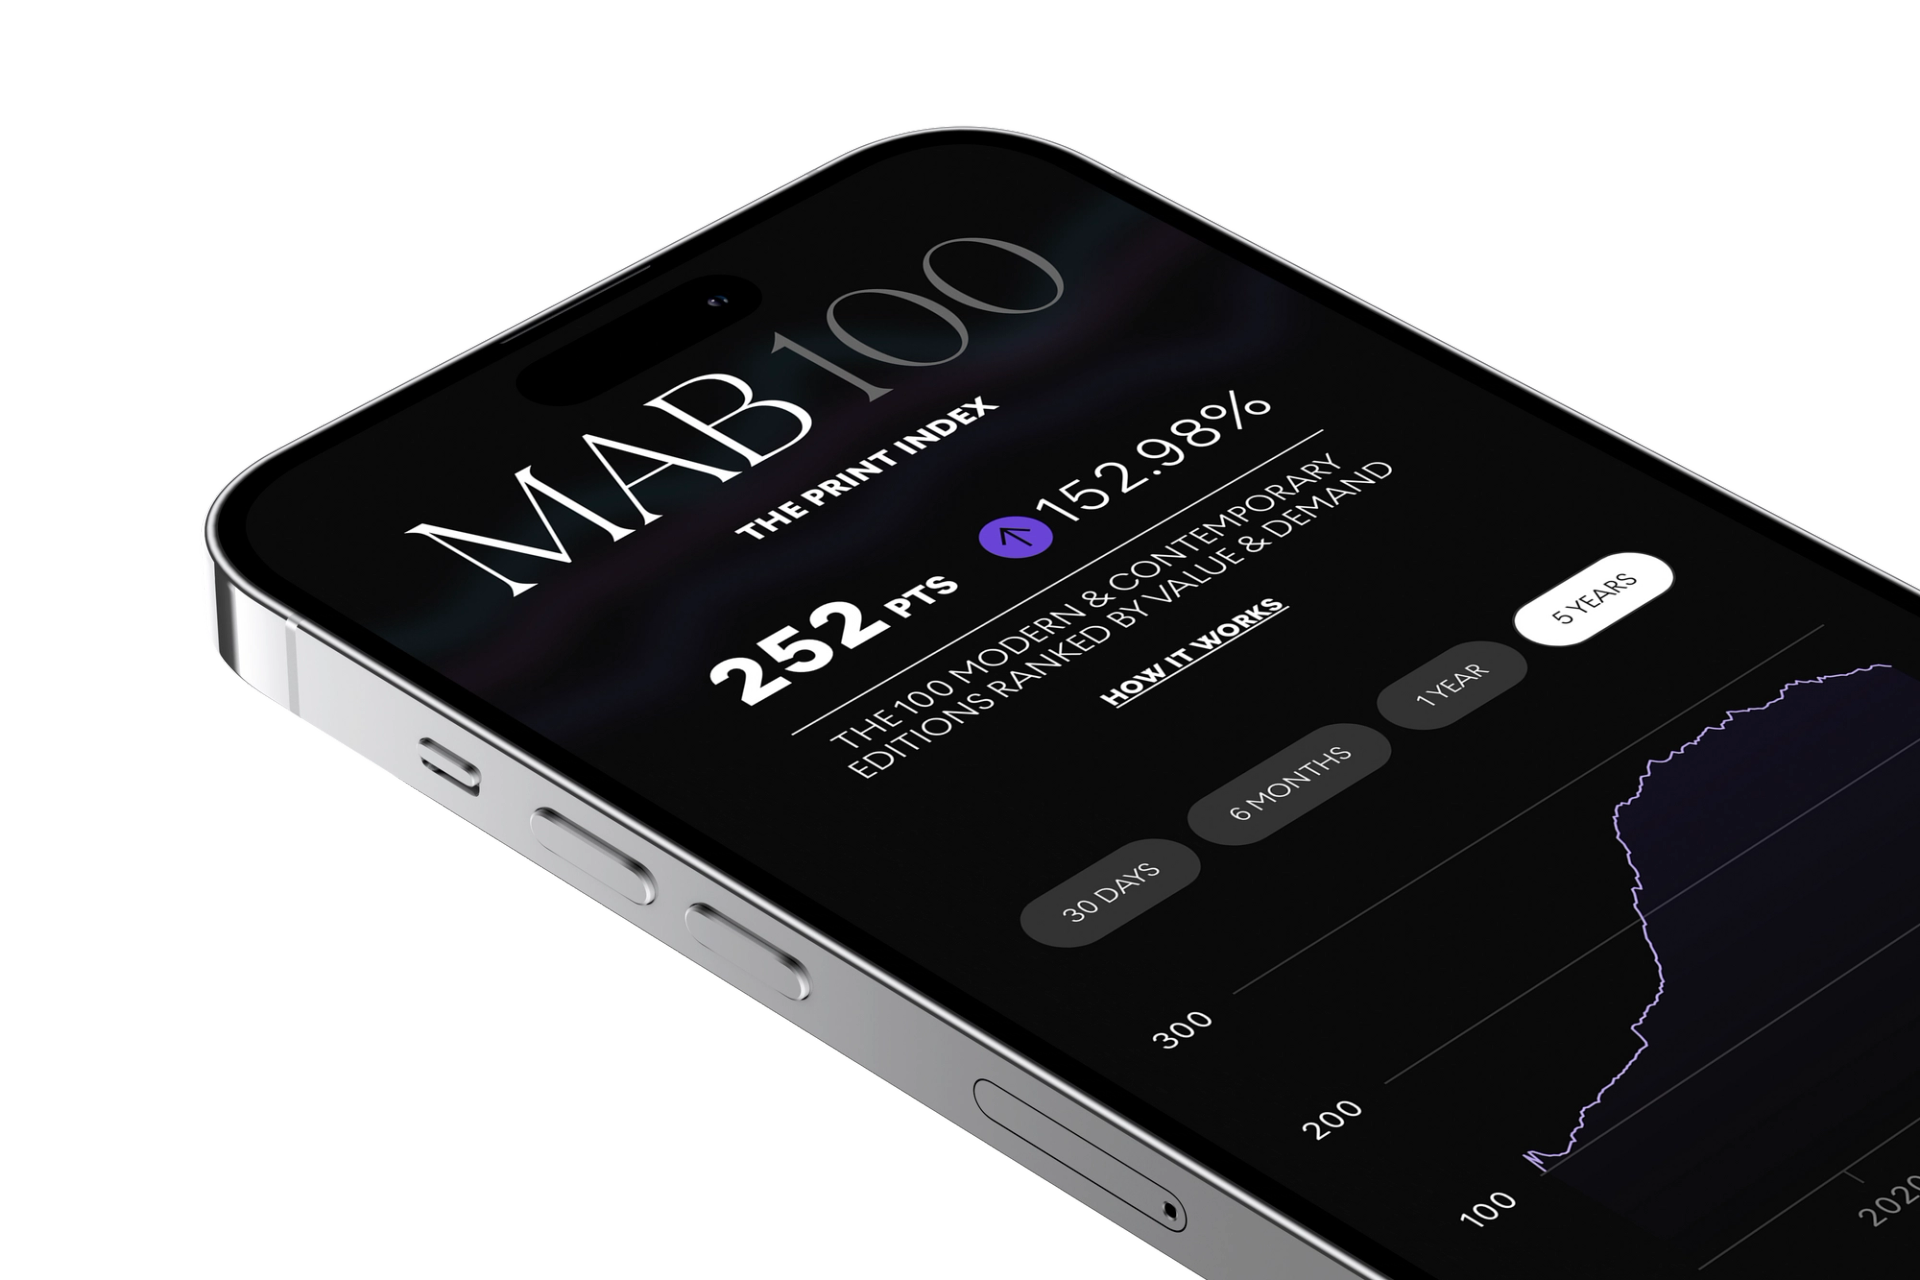 MAB100 by MyArtBroker shown on a phone screen